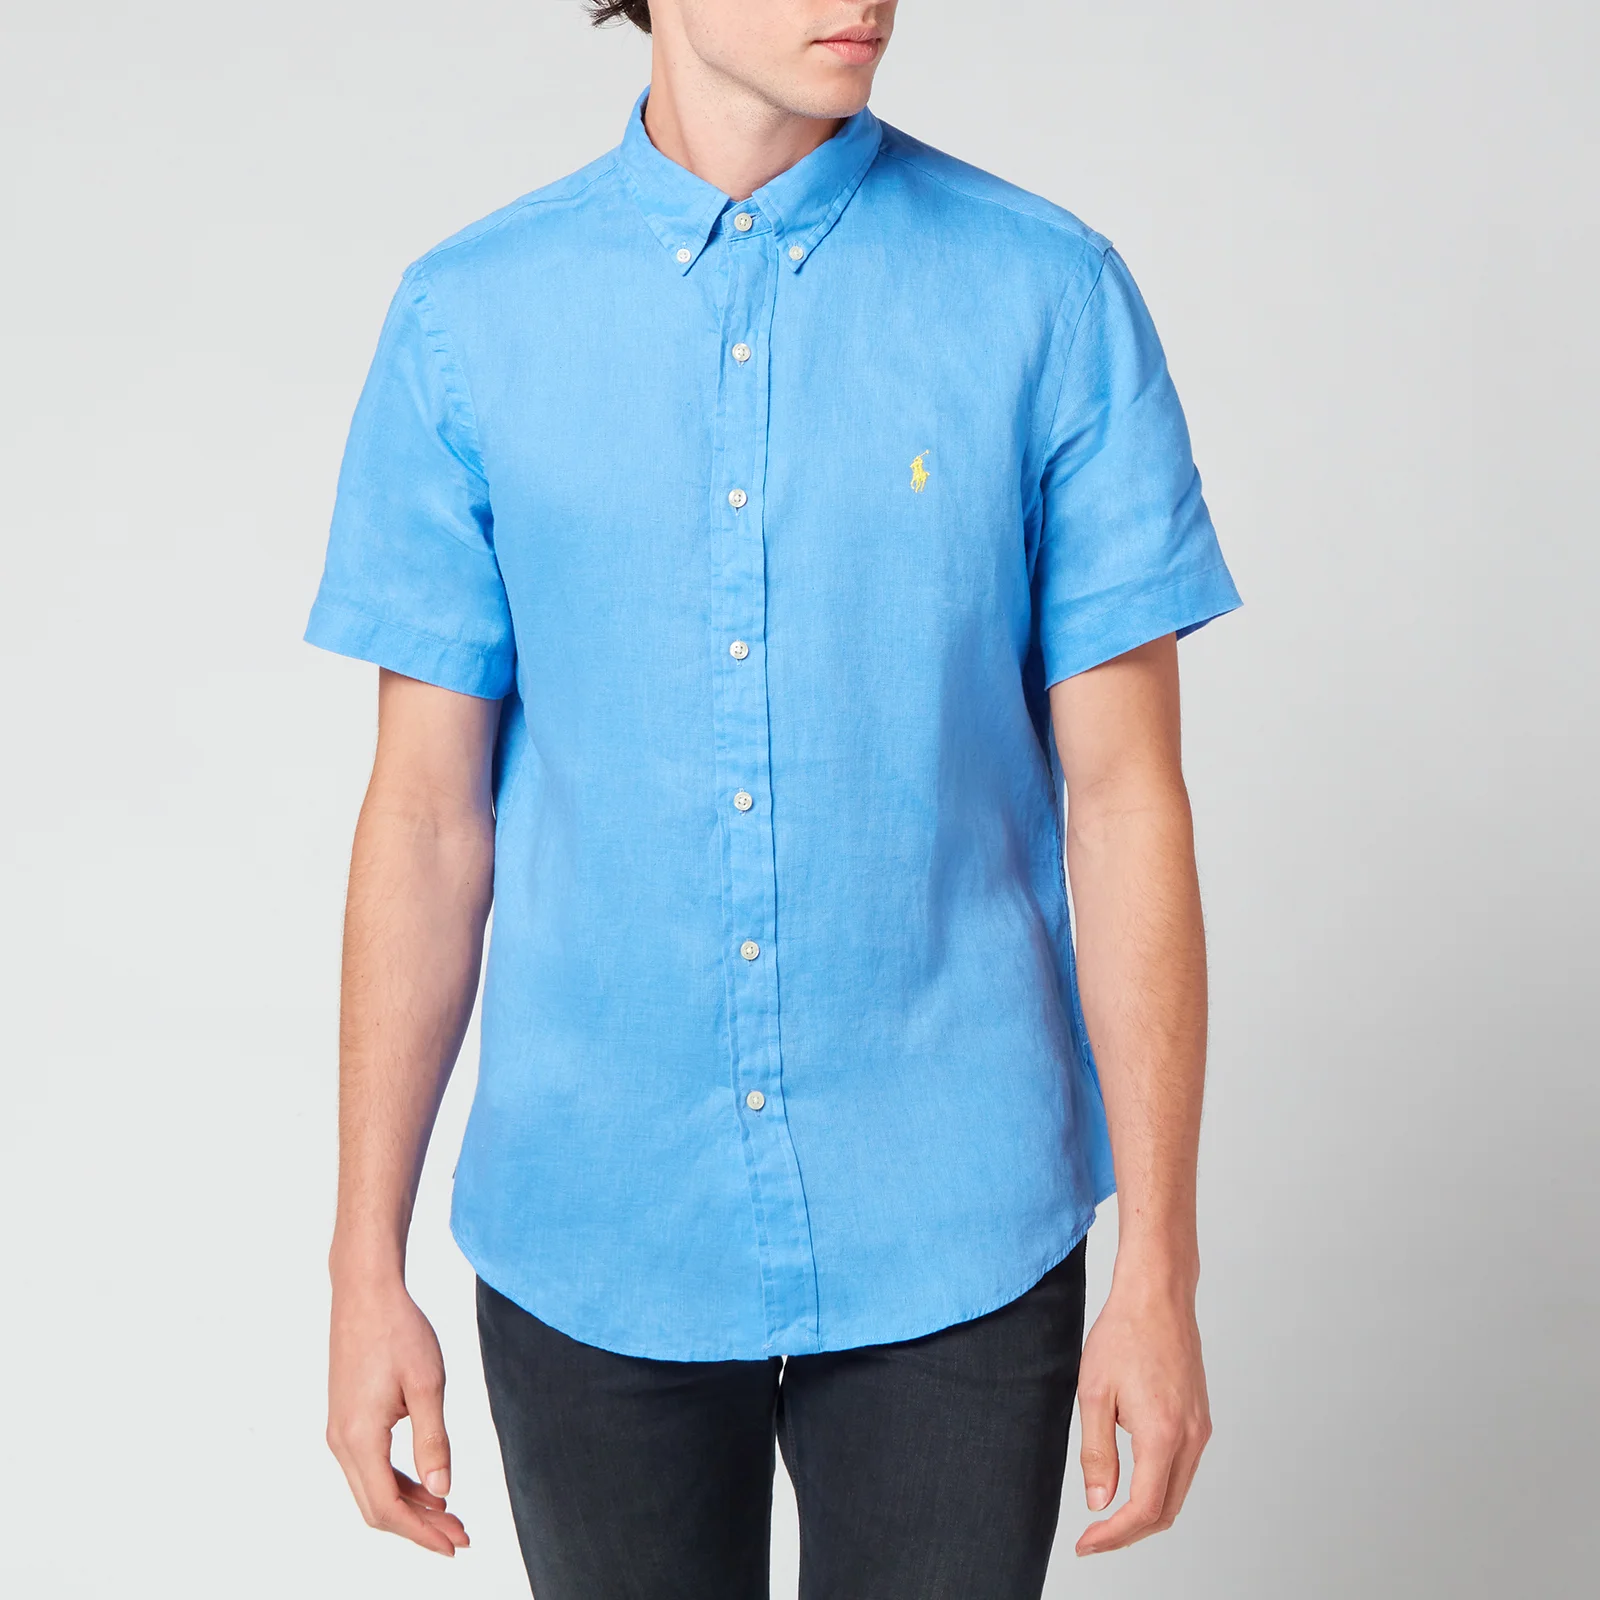 Polo Ralph Lauren Men's Slim Fit Linen Short Sleeve Shirt - Harbor Island Blue Image 1